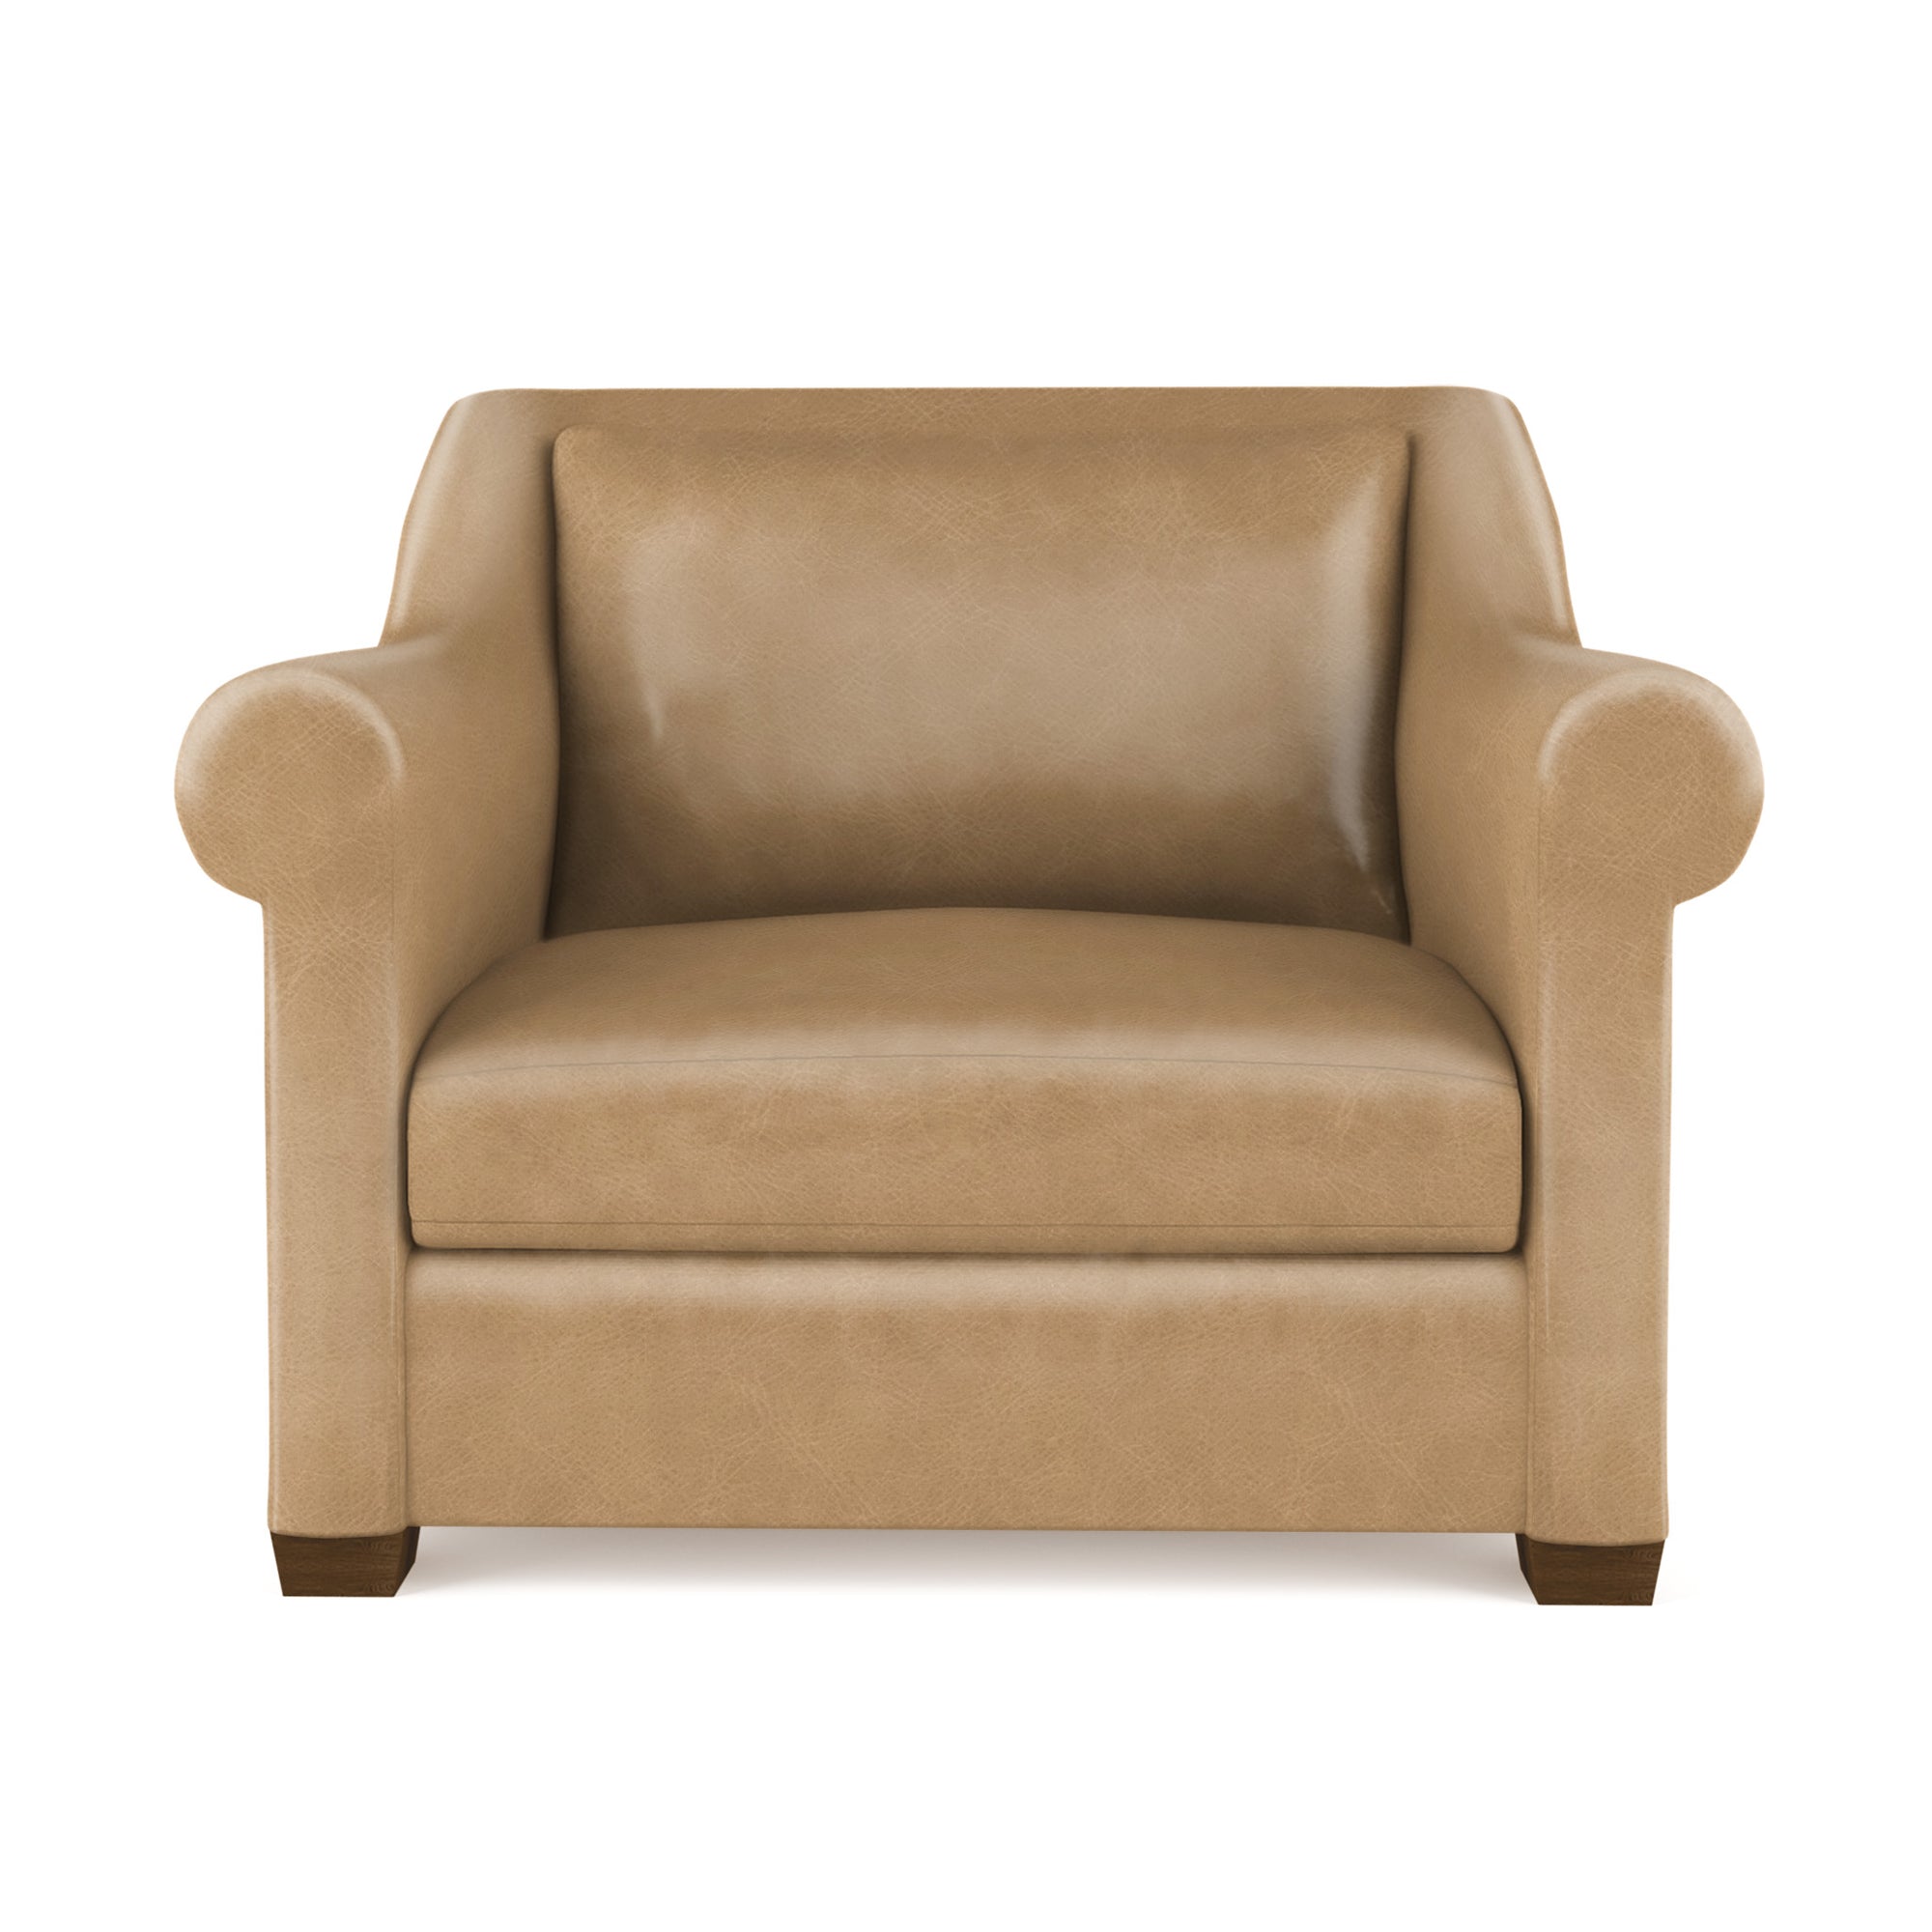 Thompson Chair - Marzipan Vintage Leather